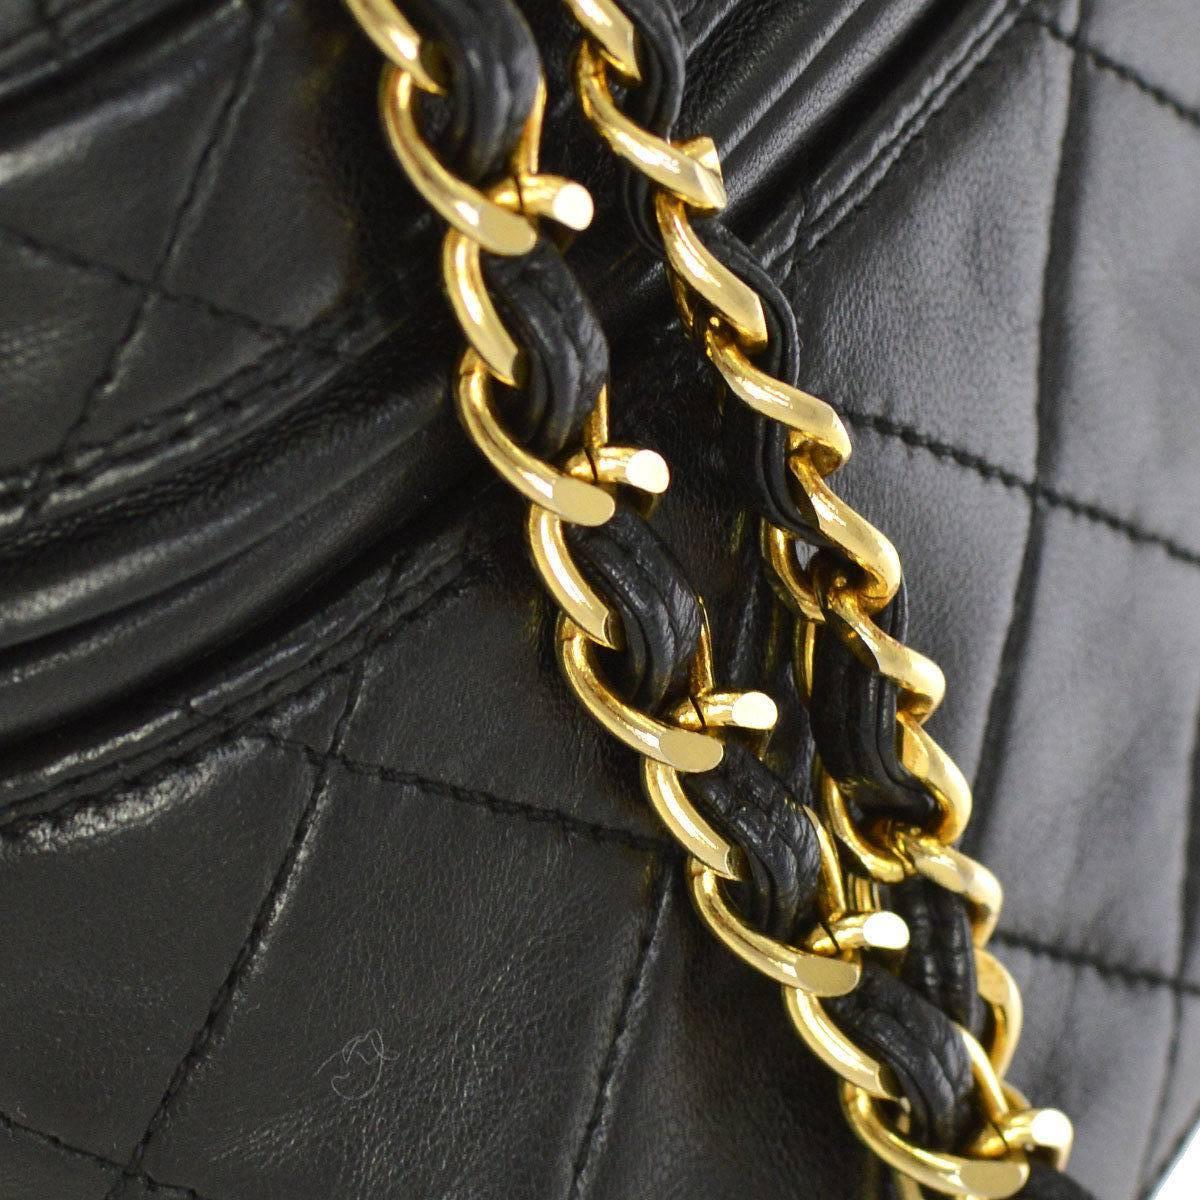 Chanel Vintage Rare Black Lambskin Gold Tassel Top Zip Evening Shoulder Bag

Lambskin
Gold tone
Zipper closure
Date code 1977218
Made in Italy
Shoulder strap drop 22